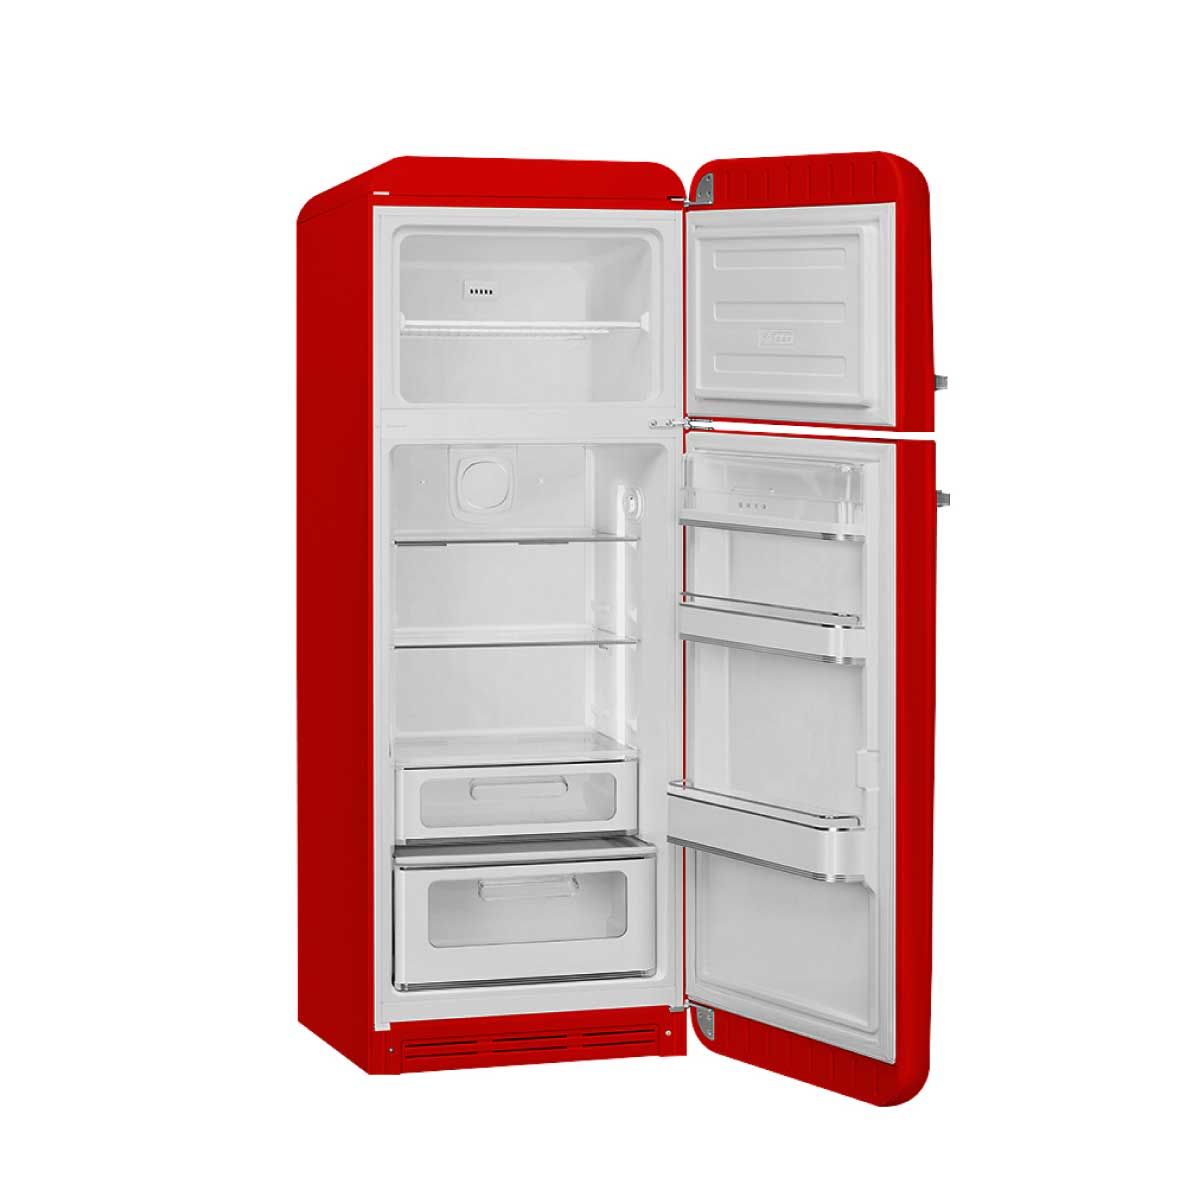 SMEG ตู้เย็น 2 ประตู 10.38 Q.สไตล์ 50  Retro รุ่น FAB30RRD5 สีแดง